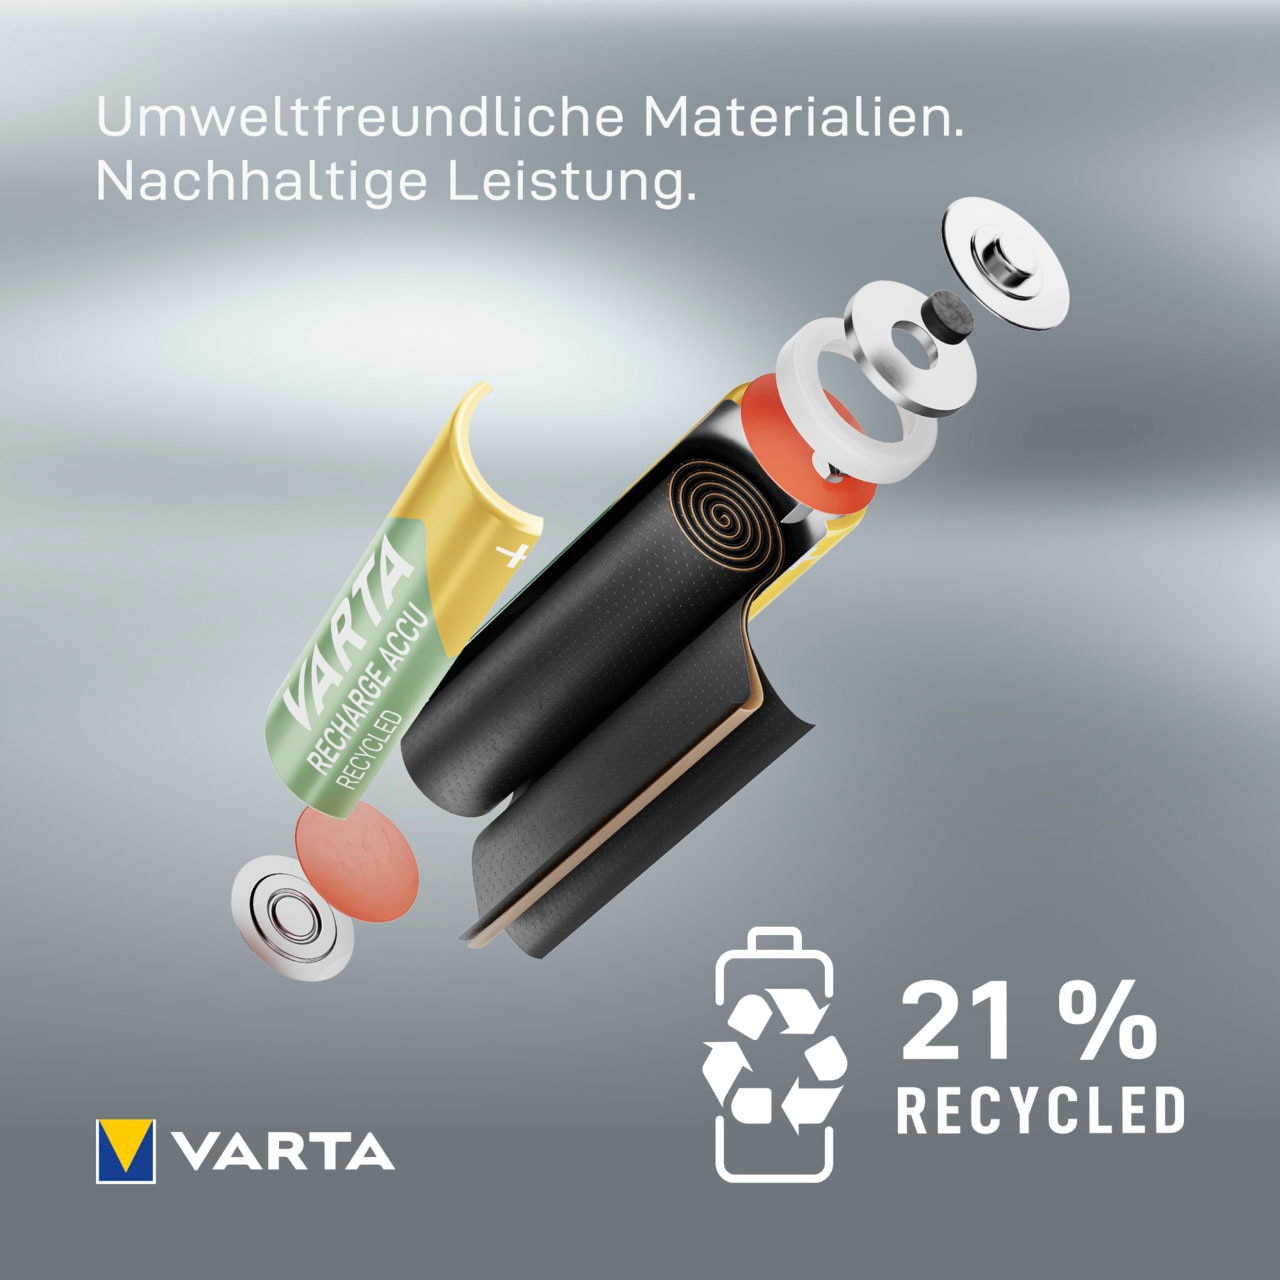 VARTA wiederaufladbare Batterien »wiederaufladbare St.), Akku AA Ready-To-Use aus - Recycled, Accu VARTA Ni-MH Pack, Memory Material Micro wiederaufladbar (4er recyceltem 2100mAh) - Akkus«, ohne 1,2 V, Recharge 4 (Packung, 11% vorgeladener